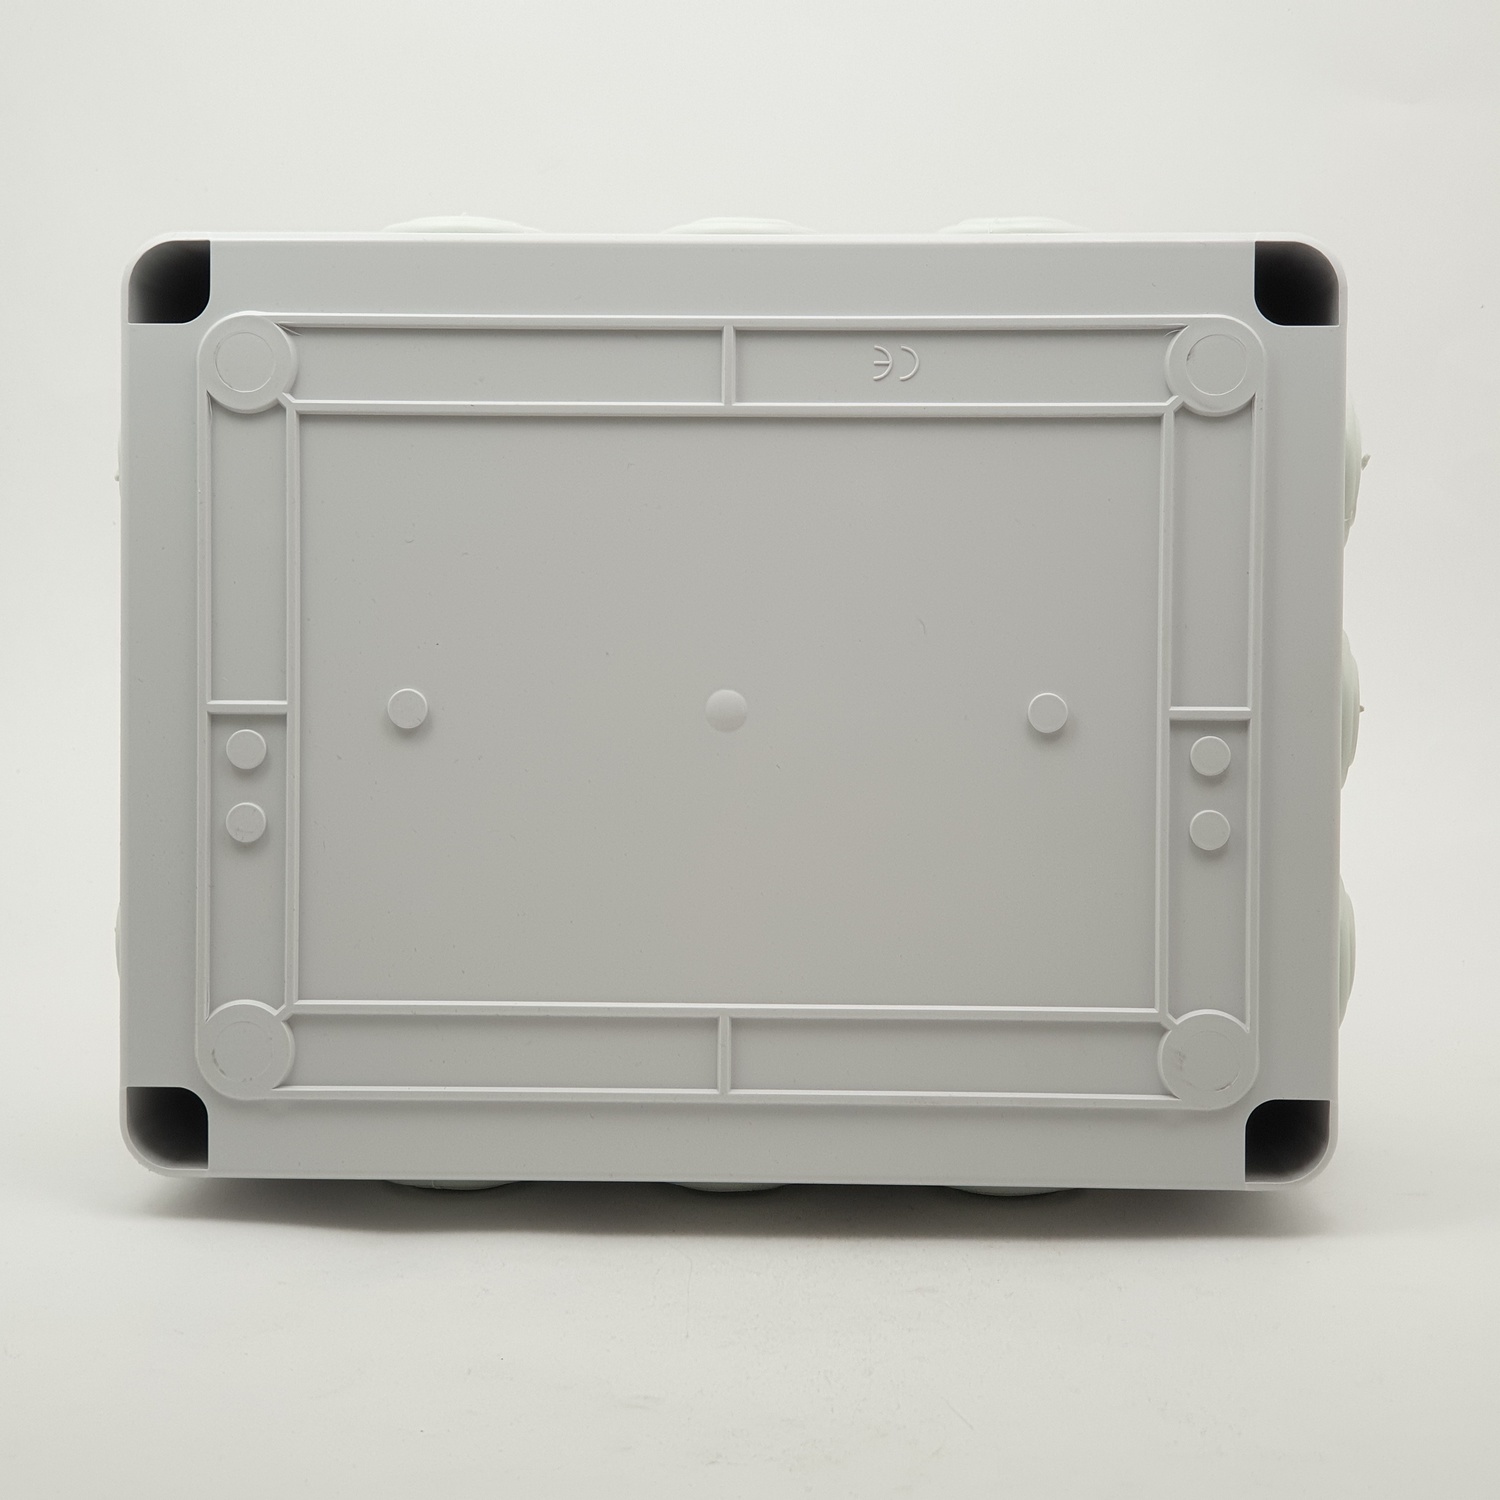 V.E.G. กล่องกันน้ำพลาสติก รุ่น HTS-11 255x200x120mm. สีขาว